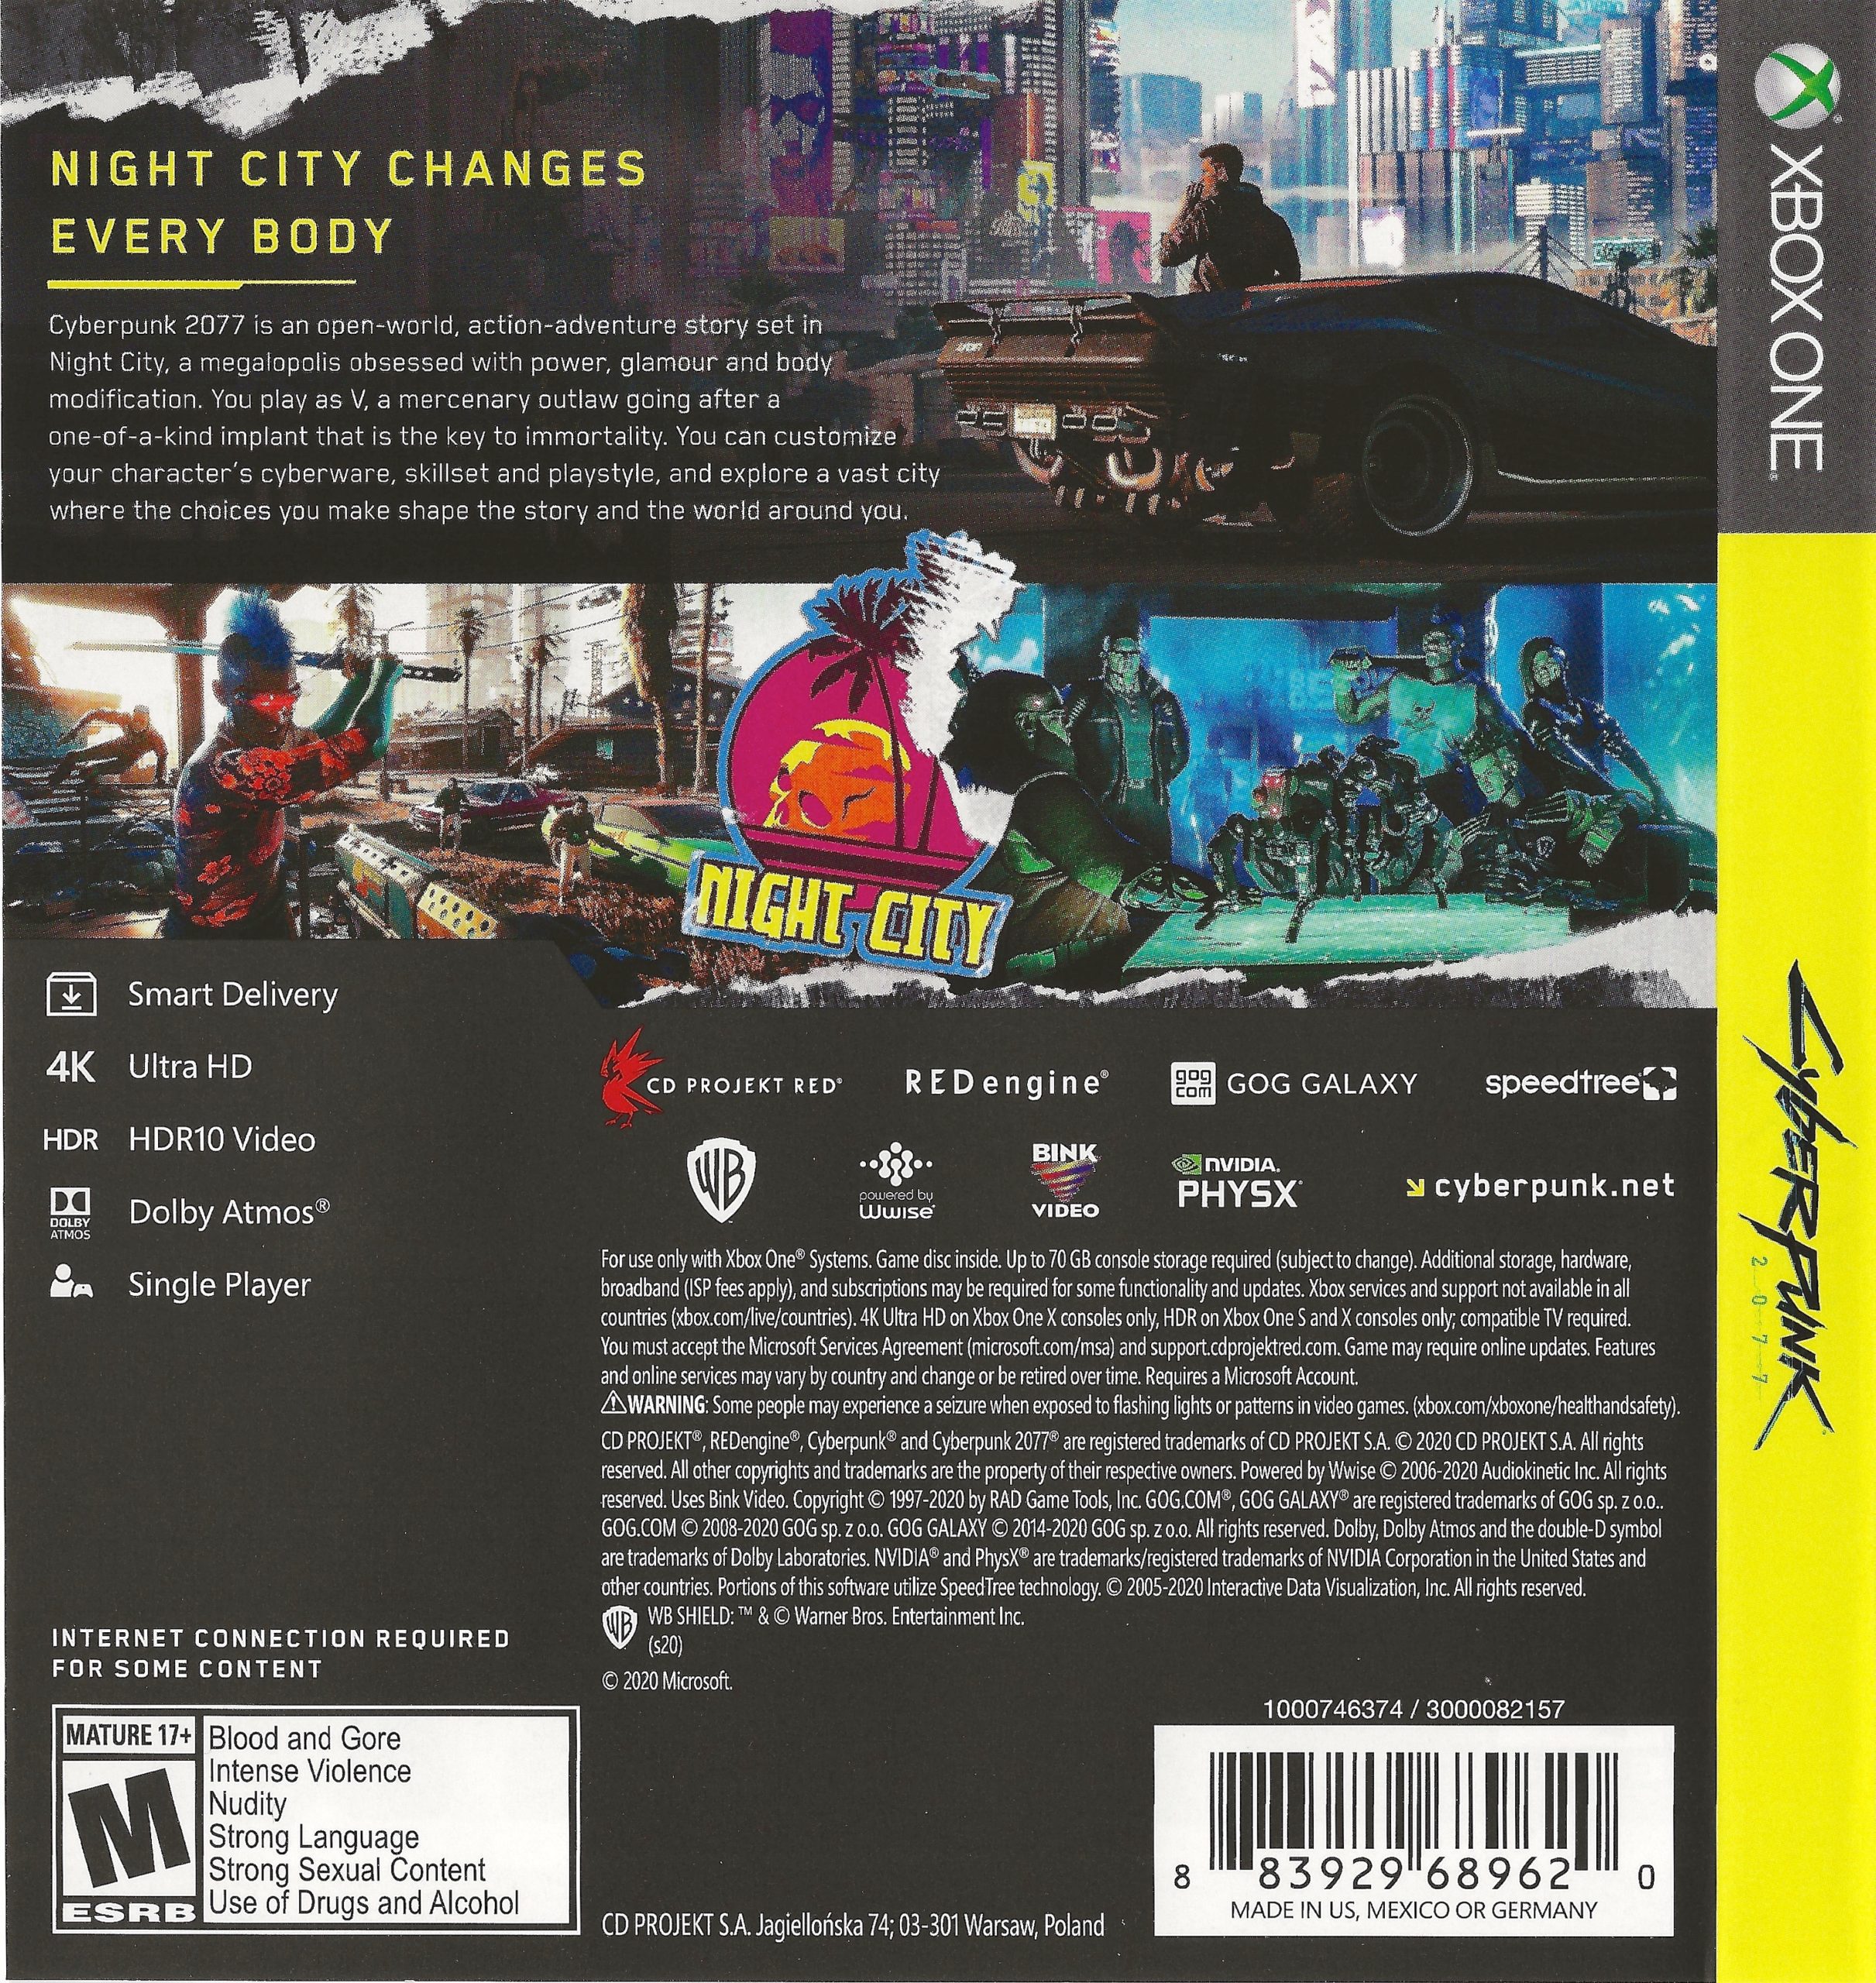 Cyberpunk 2077 Xbox One (New)